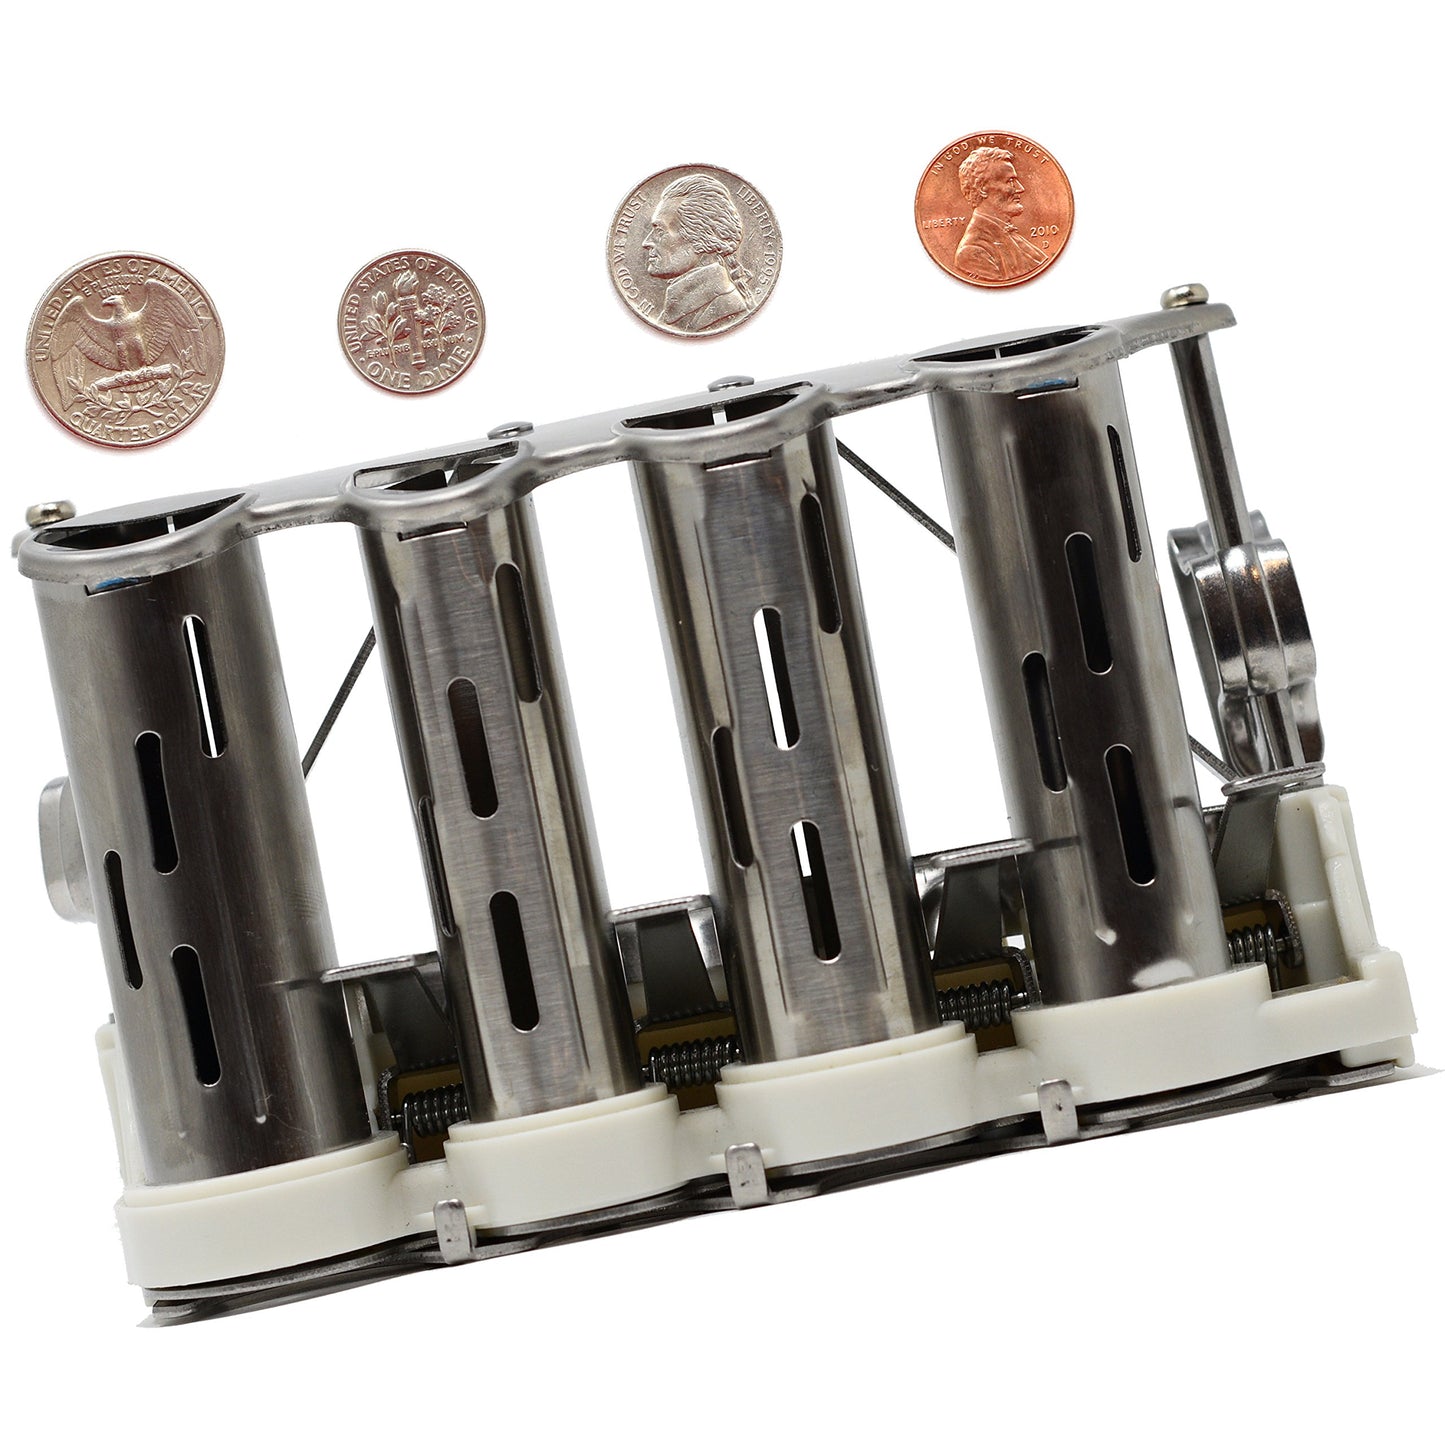 4 Barrel Steel Coin Dispenser Money Changer with Belt Clips, Silver